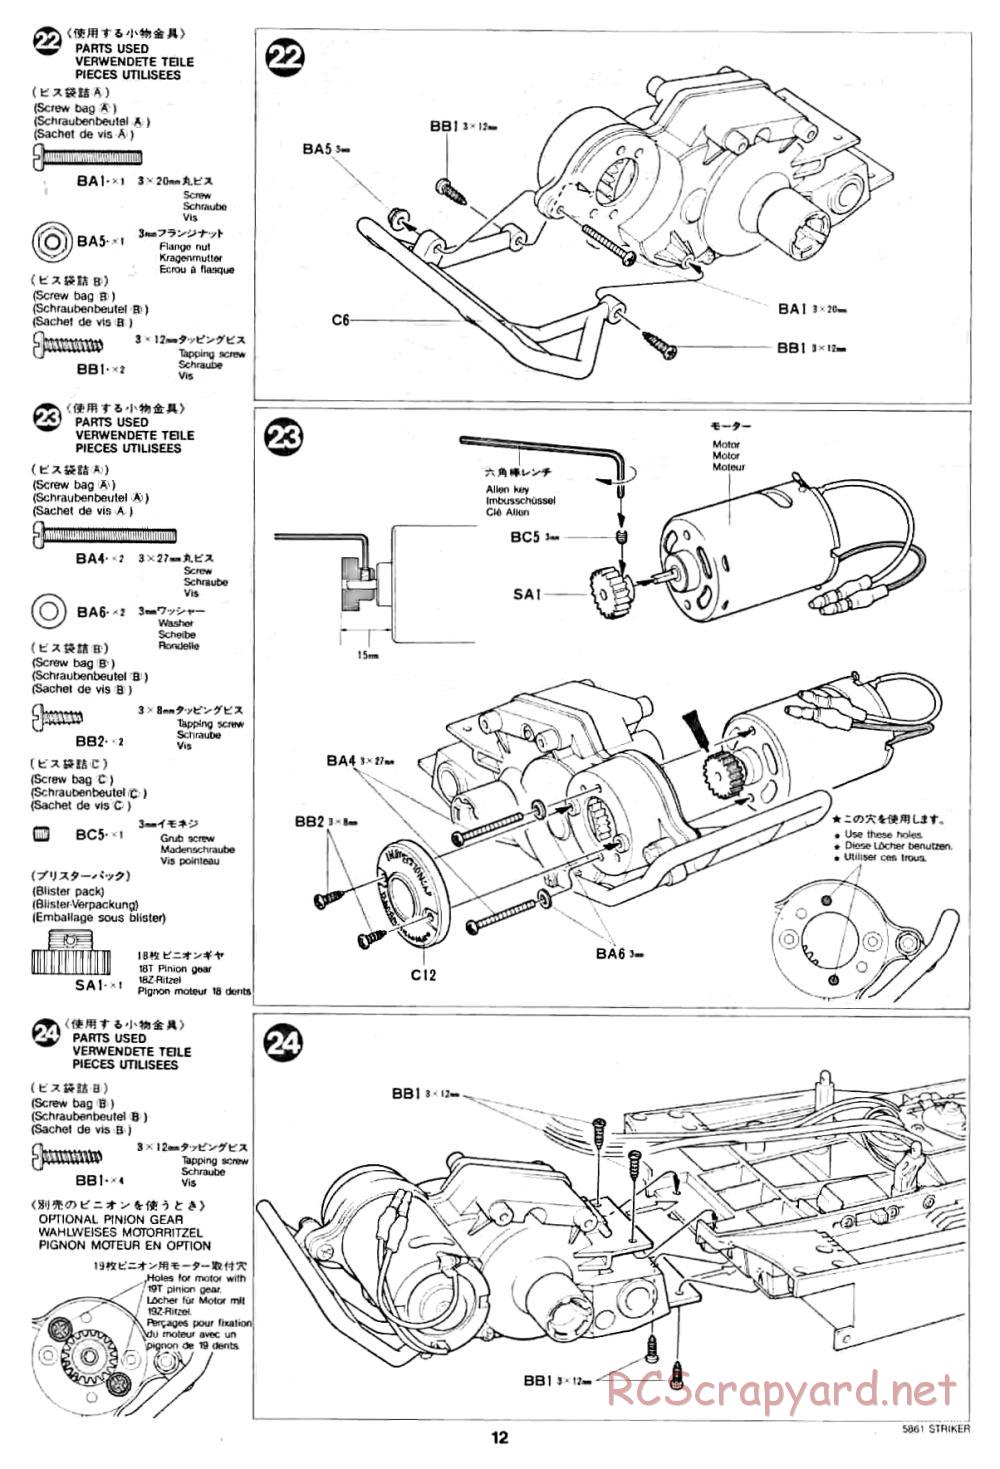 Tamiya - Striker - 58061 - Manual - Page 12